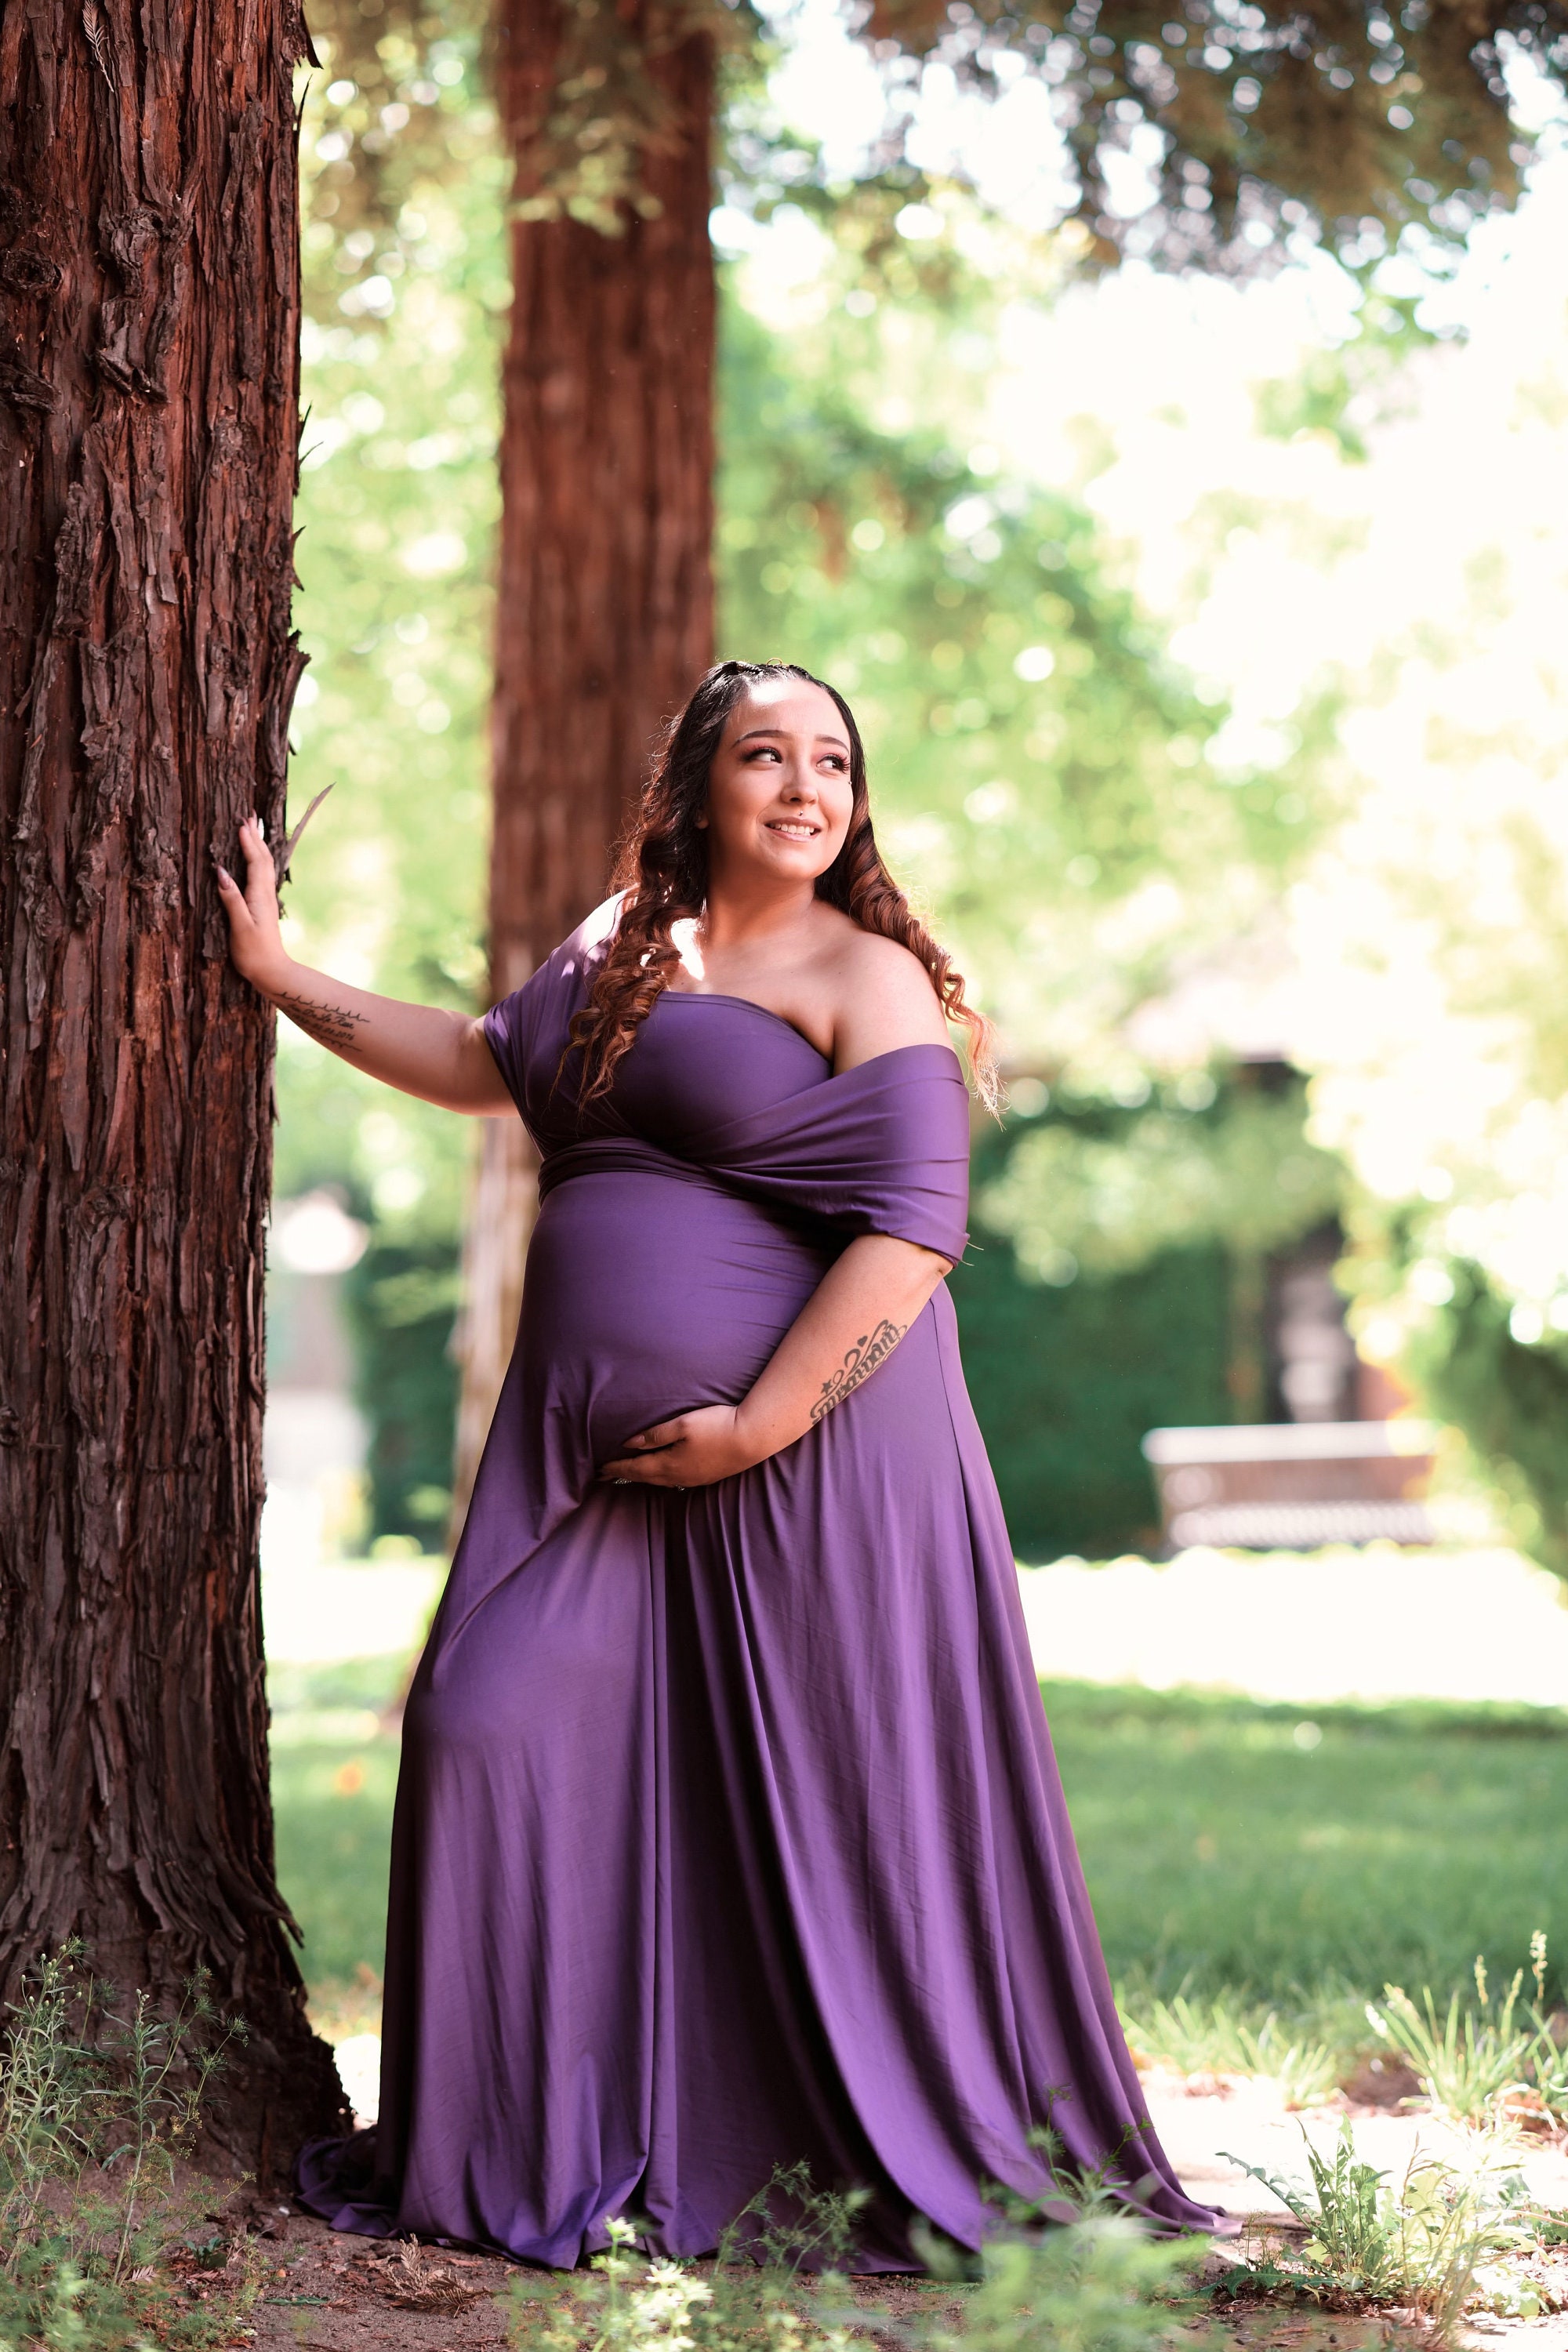 Quealent Dress Clothes Summer Sundress Casual Pregnancy Maternity Short  Women Sleeve Maternity dress Petite Dress plus Size,Purple XL 